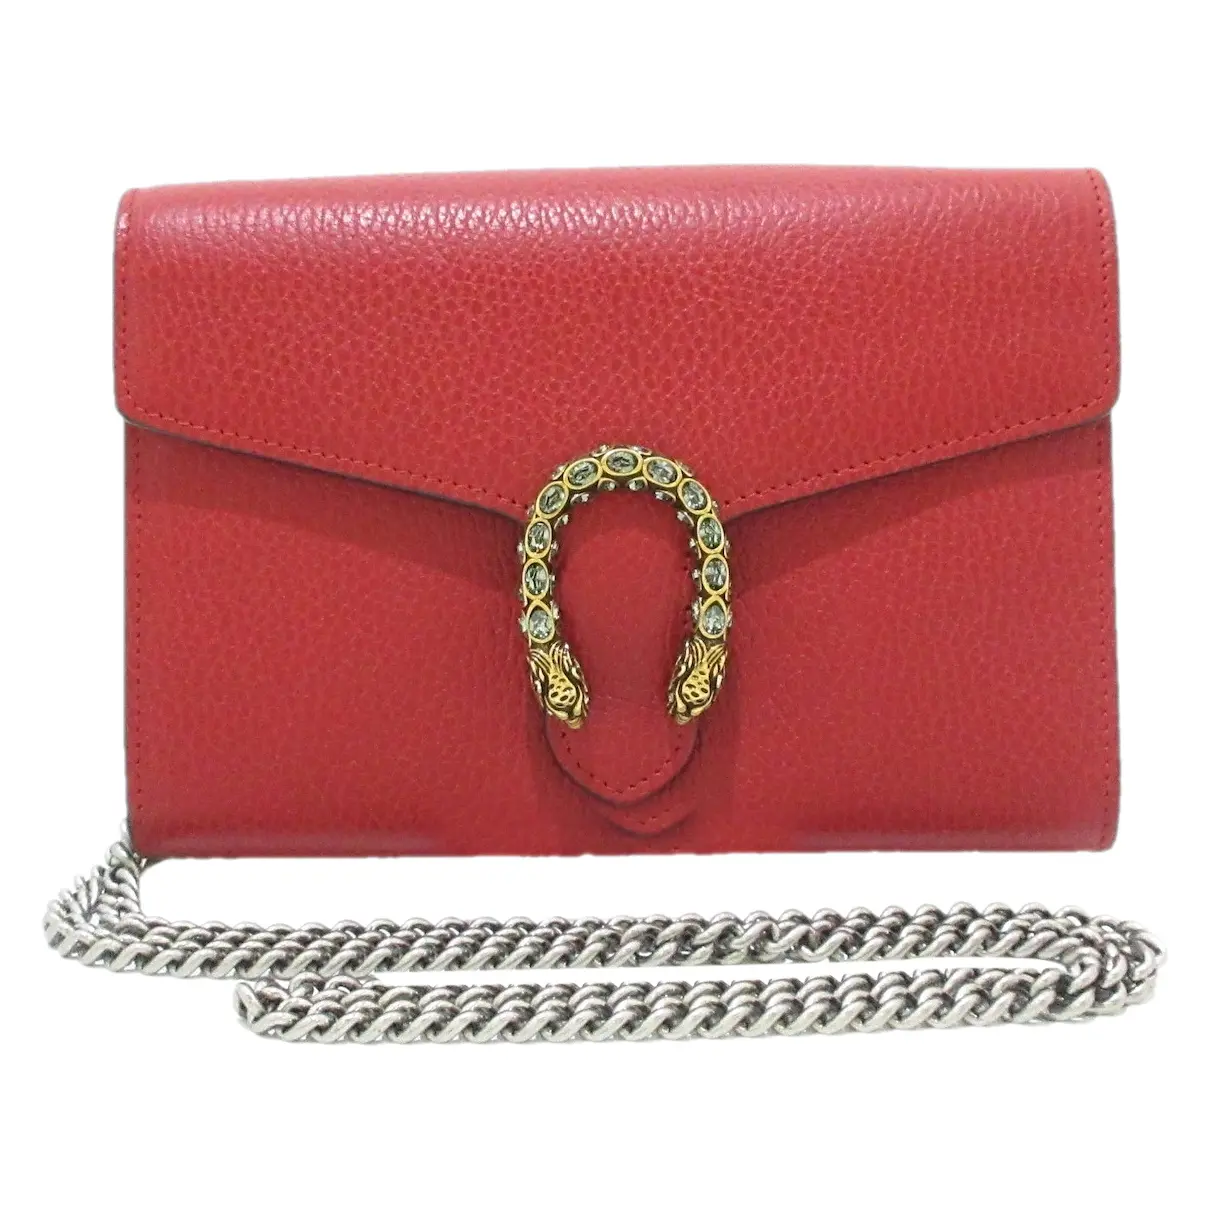 Dionysus leather purse Gucci